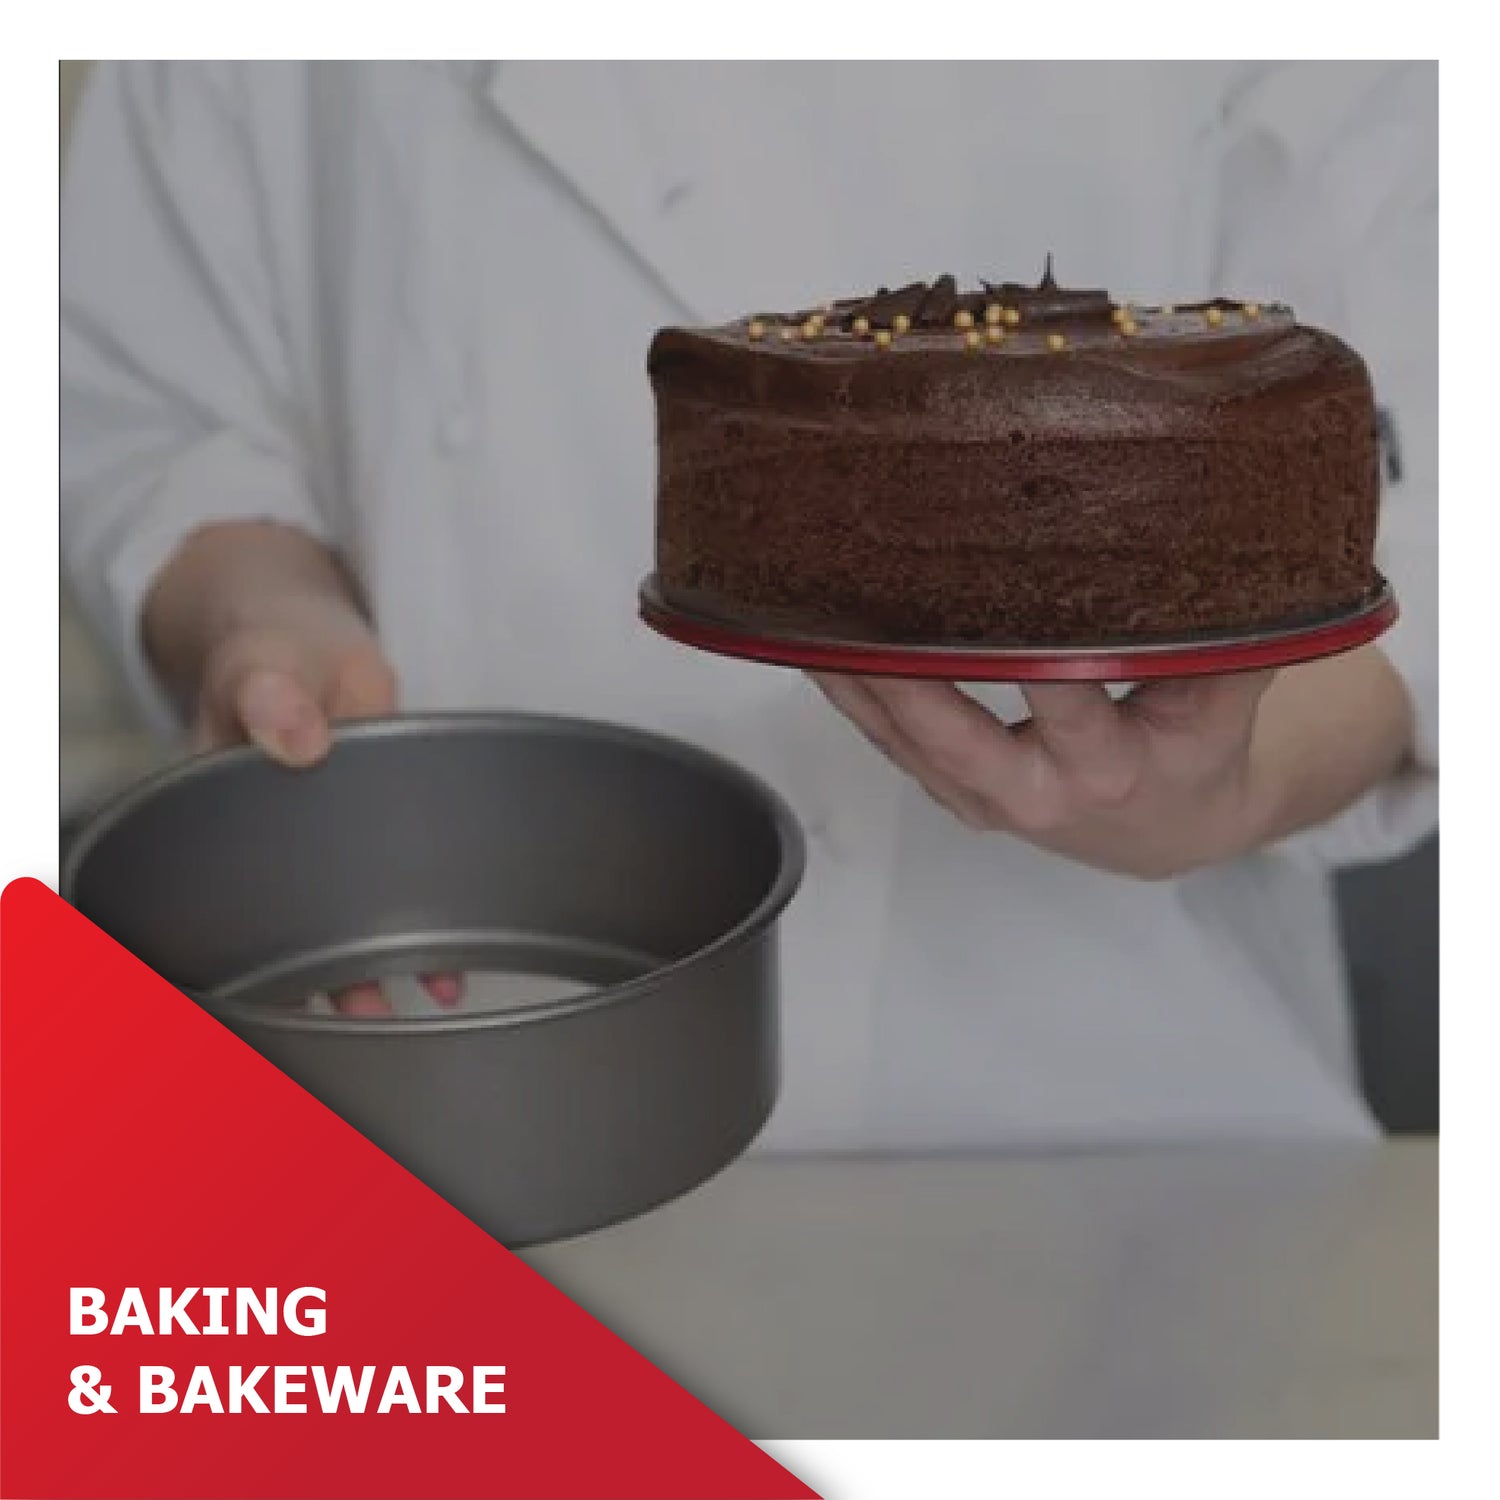 Baking & Bakeware | Category